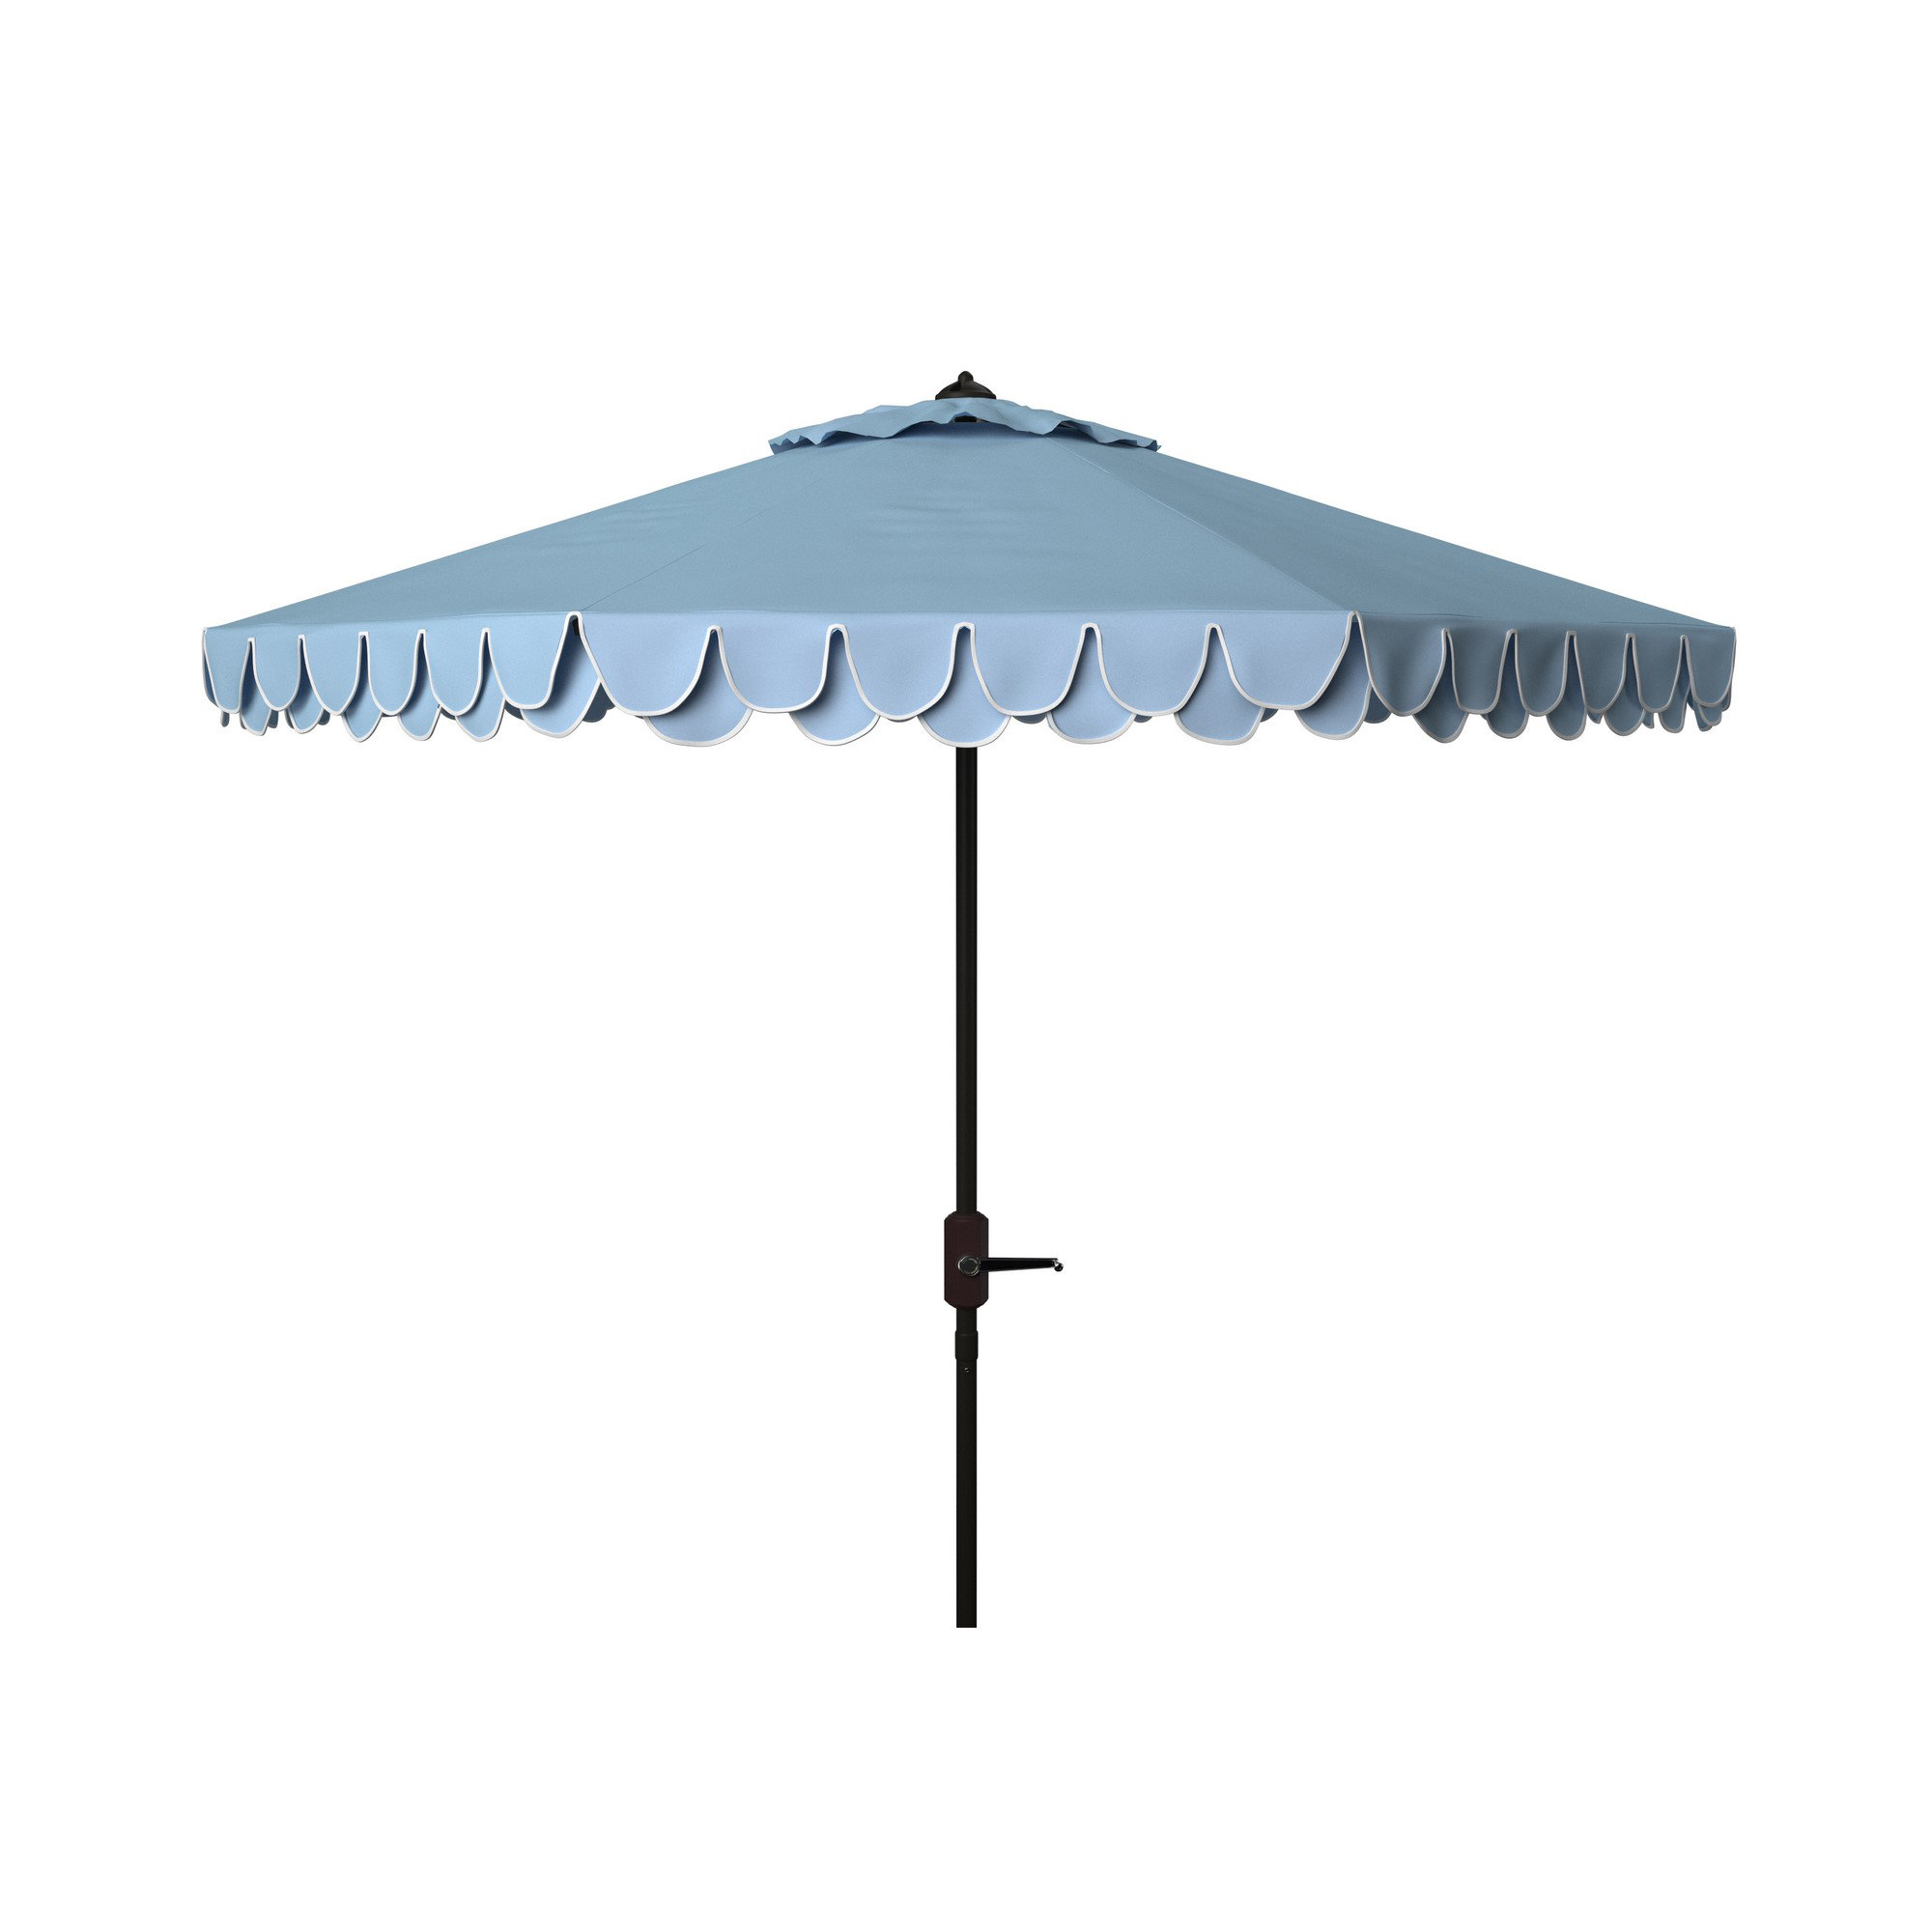 Product Line: Toys, Umbrellas